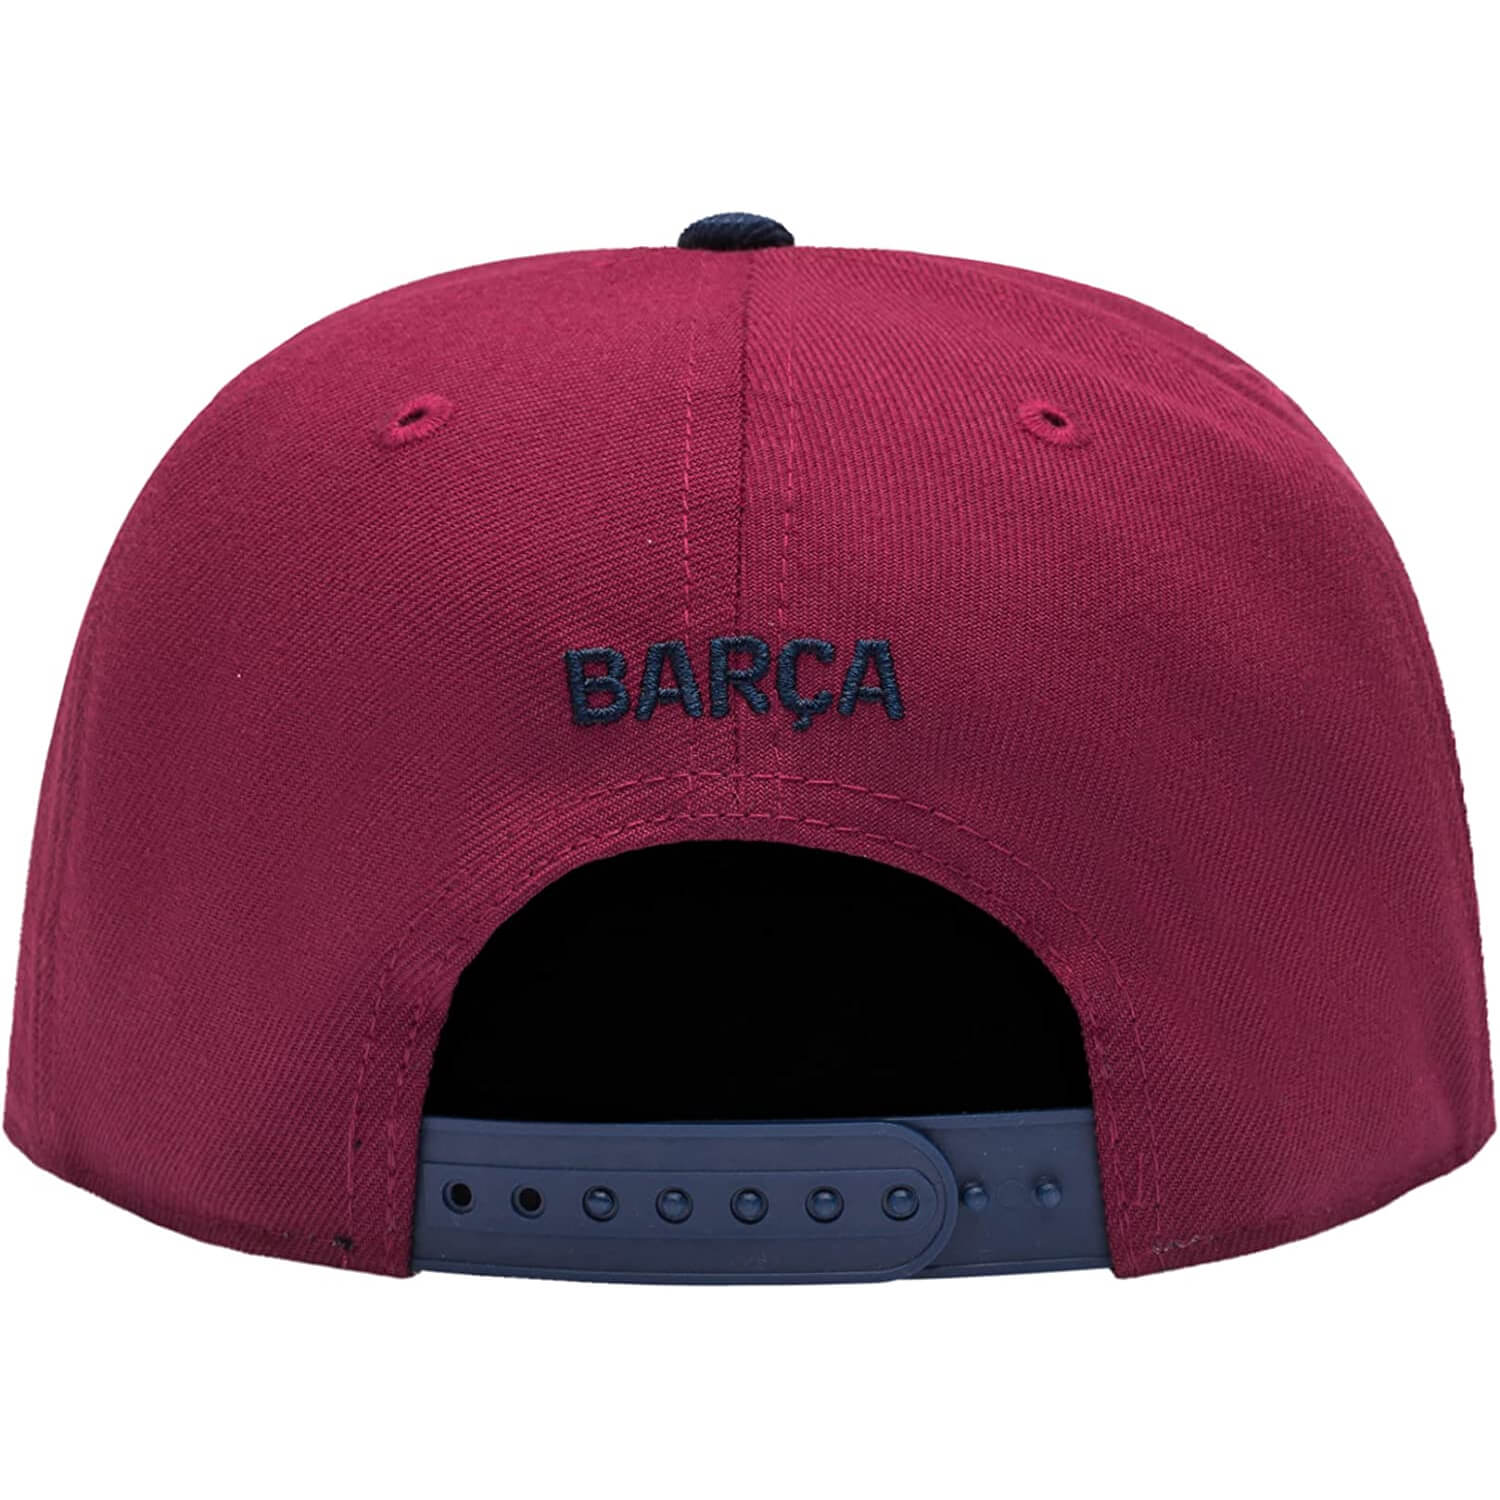 FI Collection Barcelona Team Snapback Hat - Burgundy (Back)